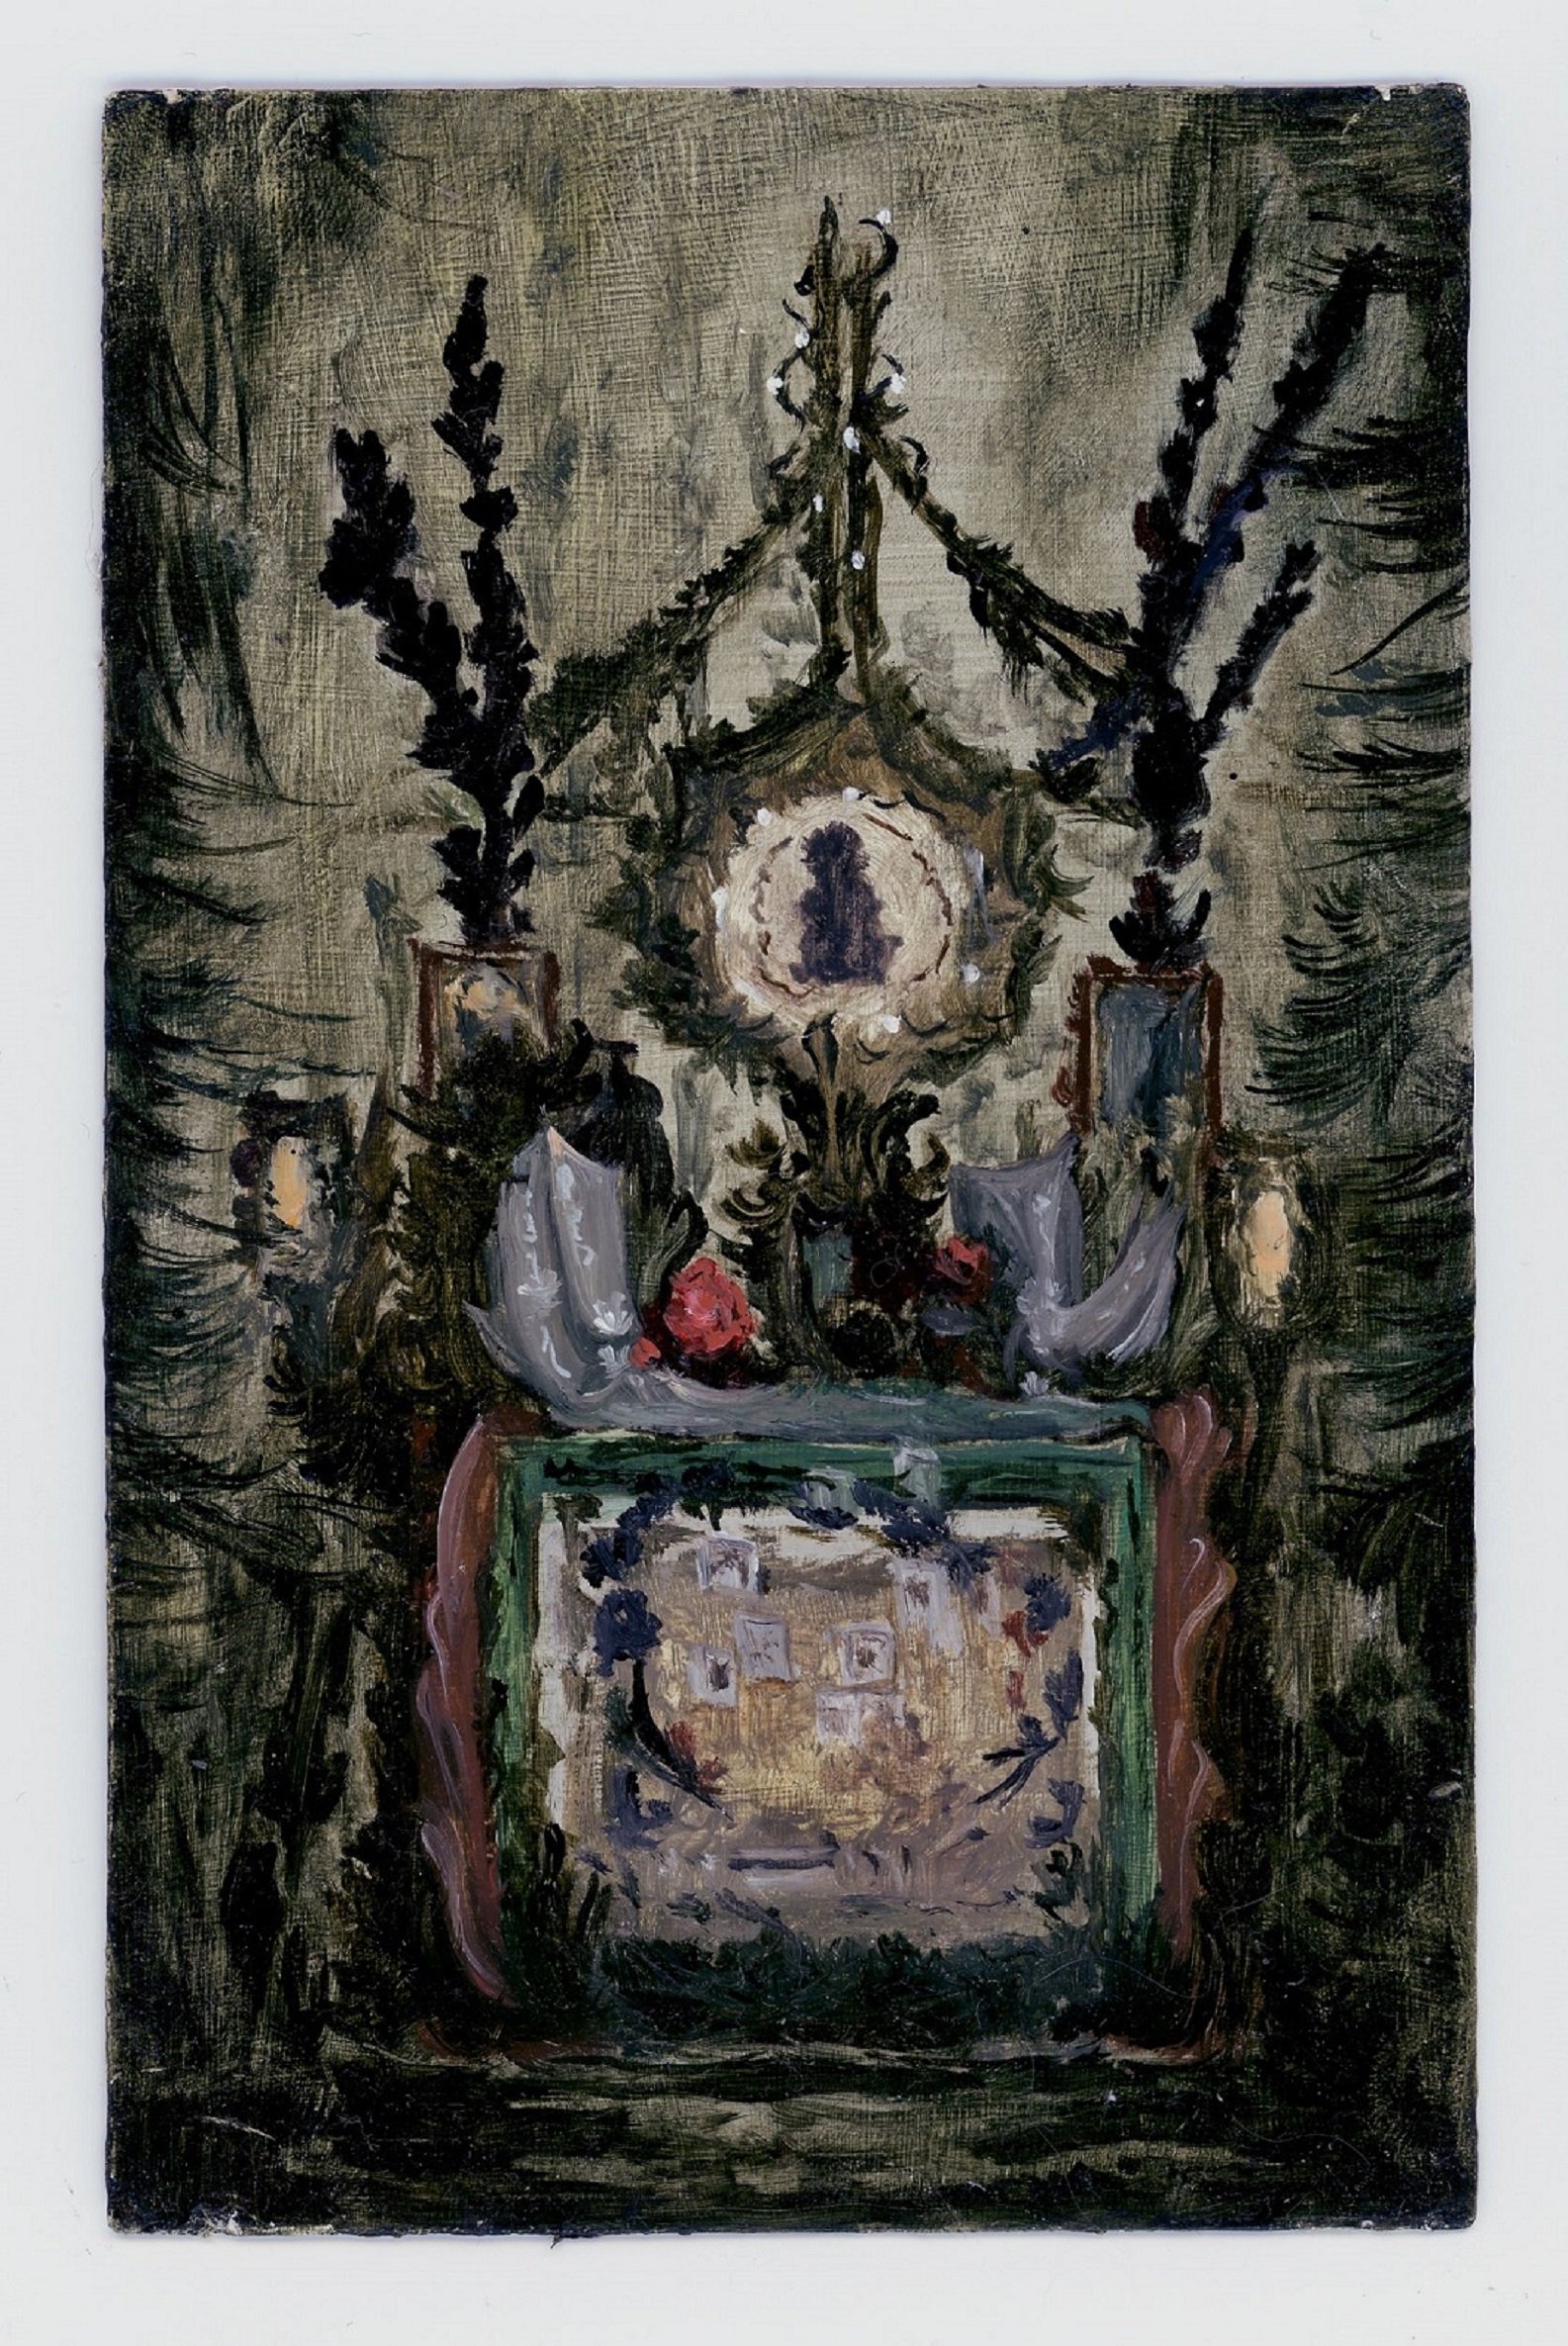 Joanna Whittle, Forest Shrine (Knock), Oil on found postcard, 15 x 10 cm, 2021 (1).jpeg